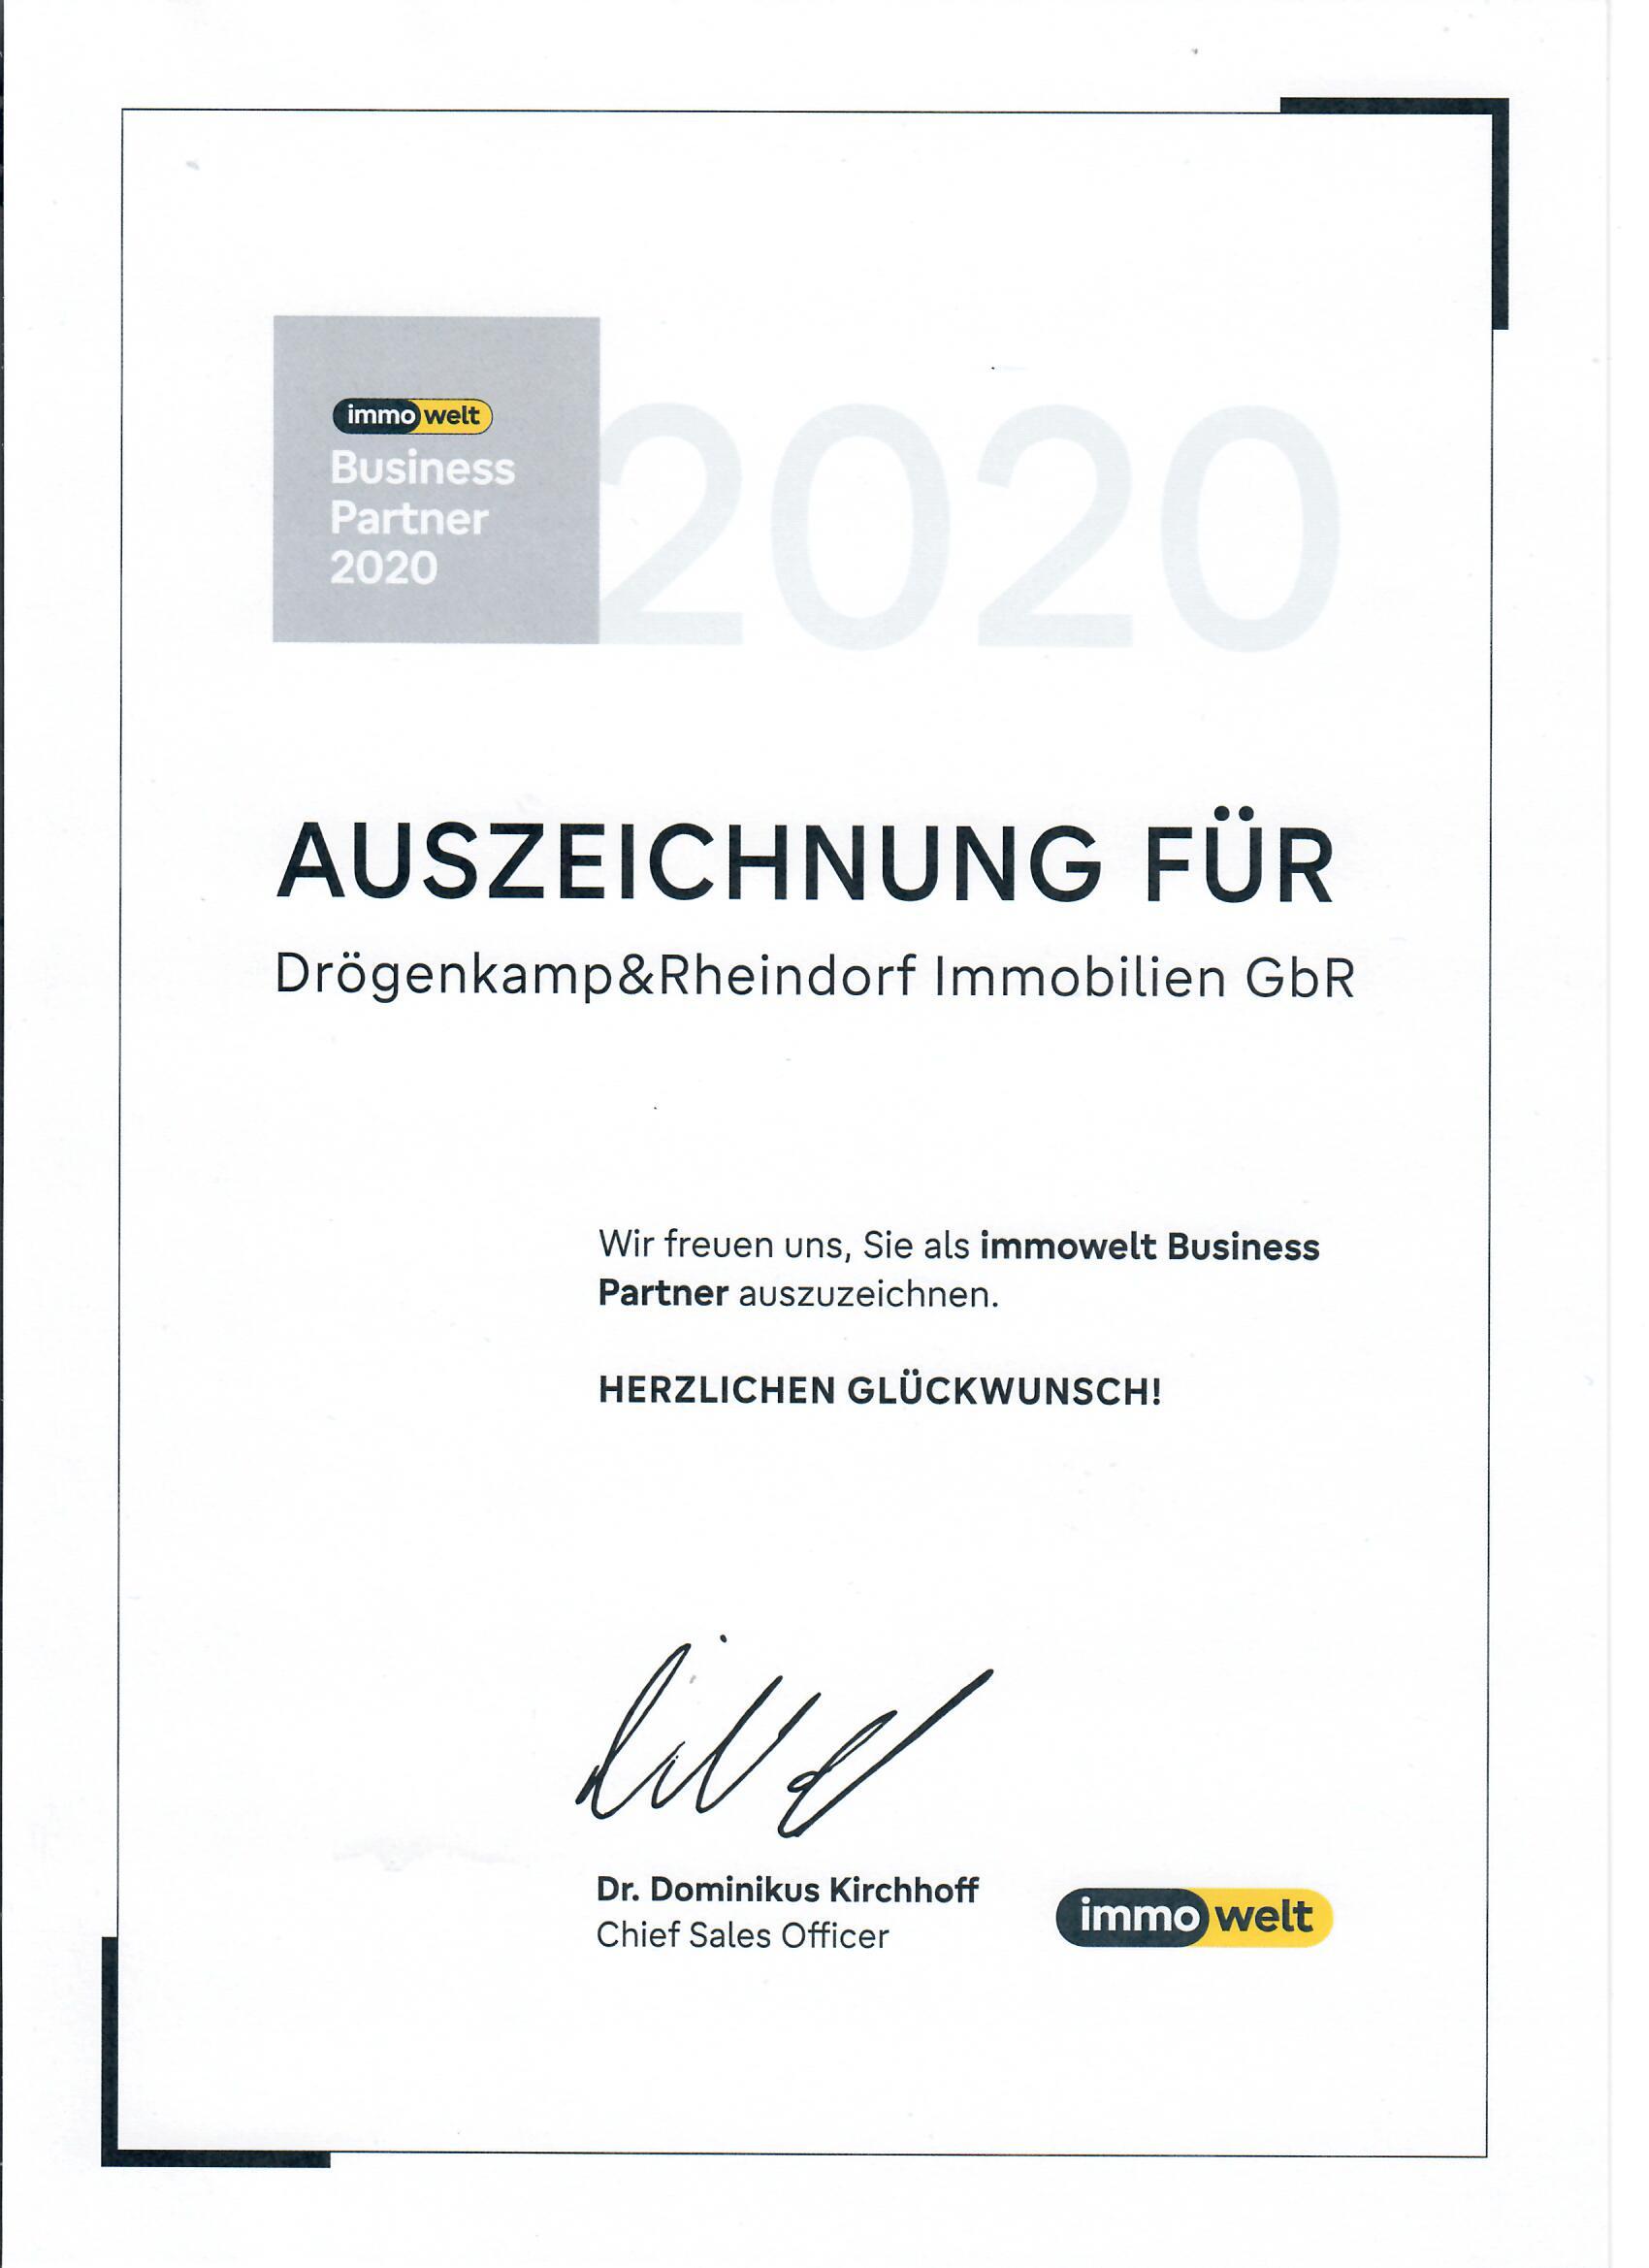 Business Partner Award 2020